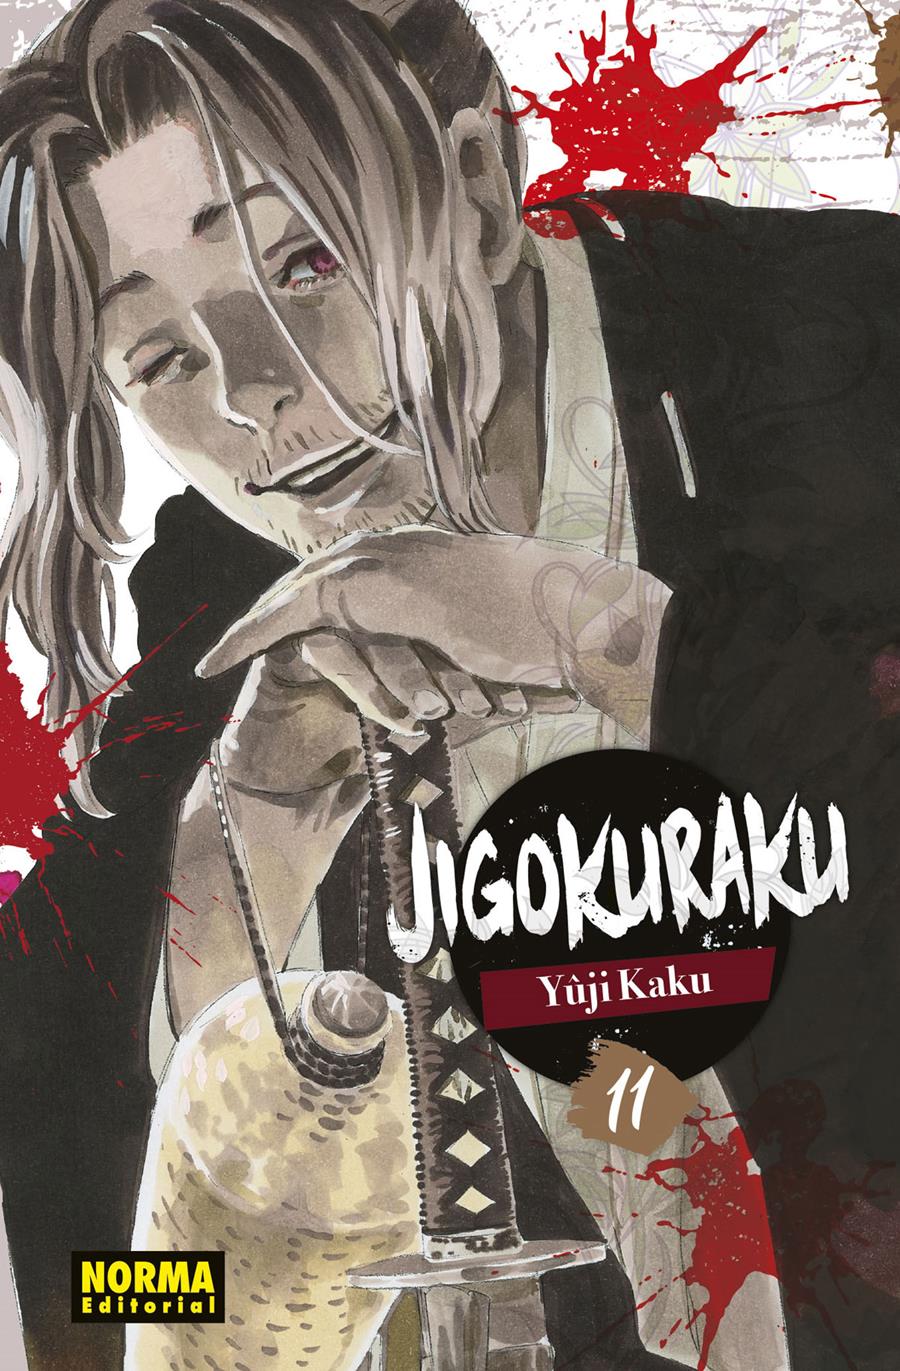 Jigokuraku 11 | N0622-NOR09 | Yûji Kaku | Terra de Còmic - Tu tienda de cómics online especializada en cómics, manga y merchandising